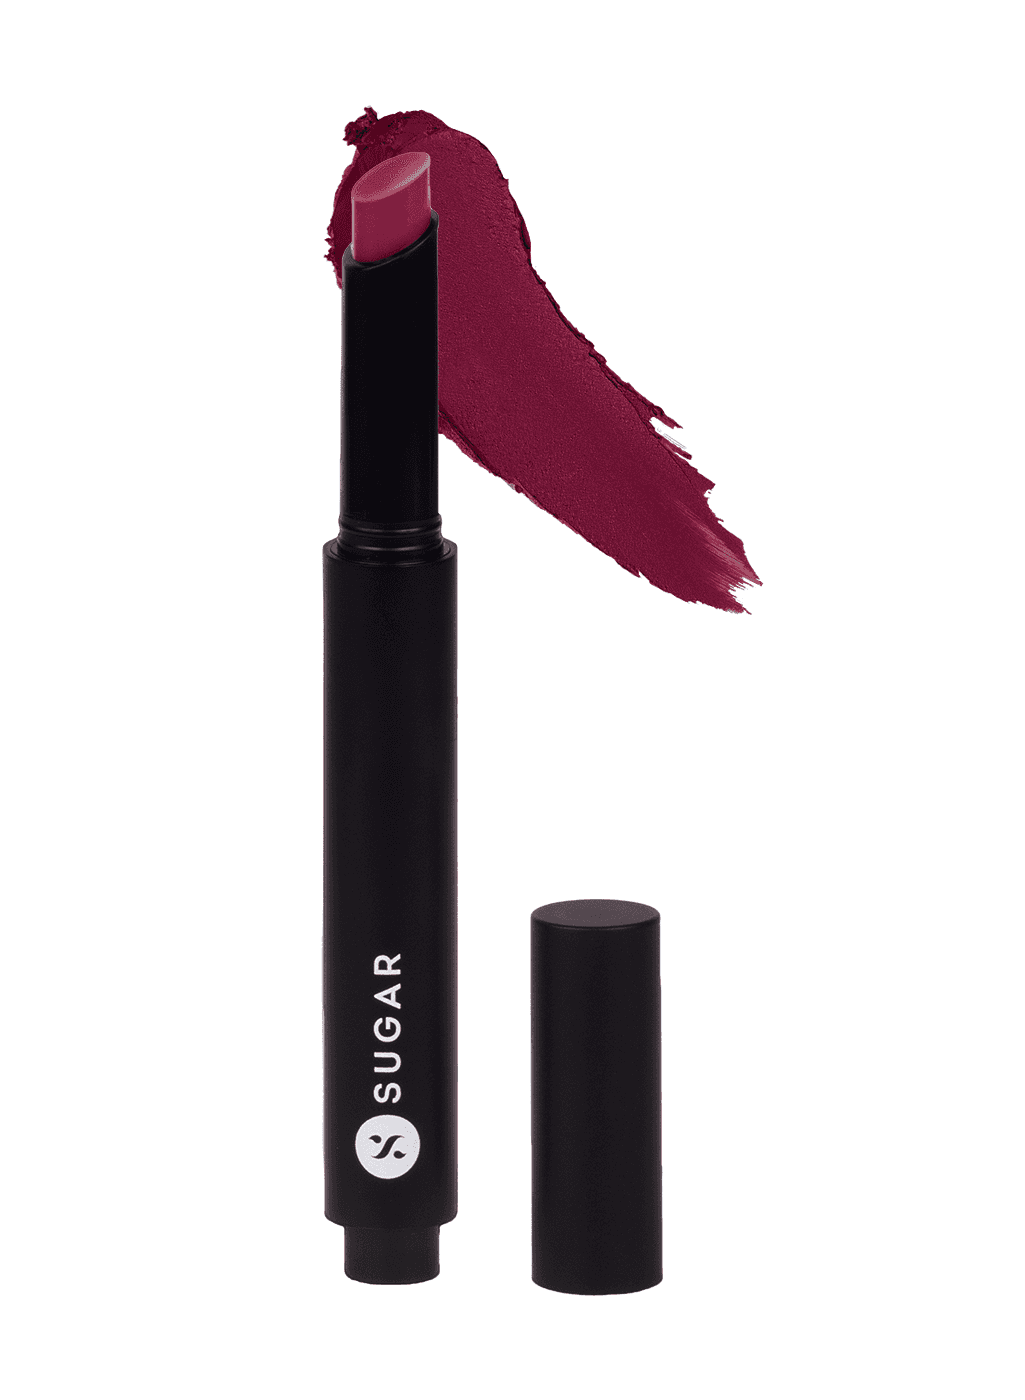 SUGAR Click Me Up Velvet Lipstick - 07 Risque Raspberry (Wine/Sangria)